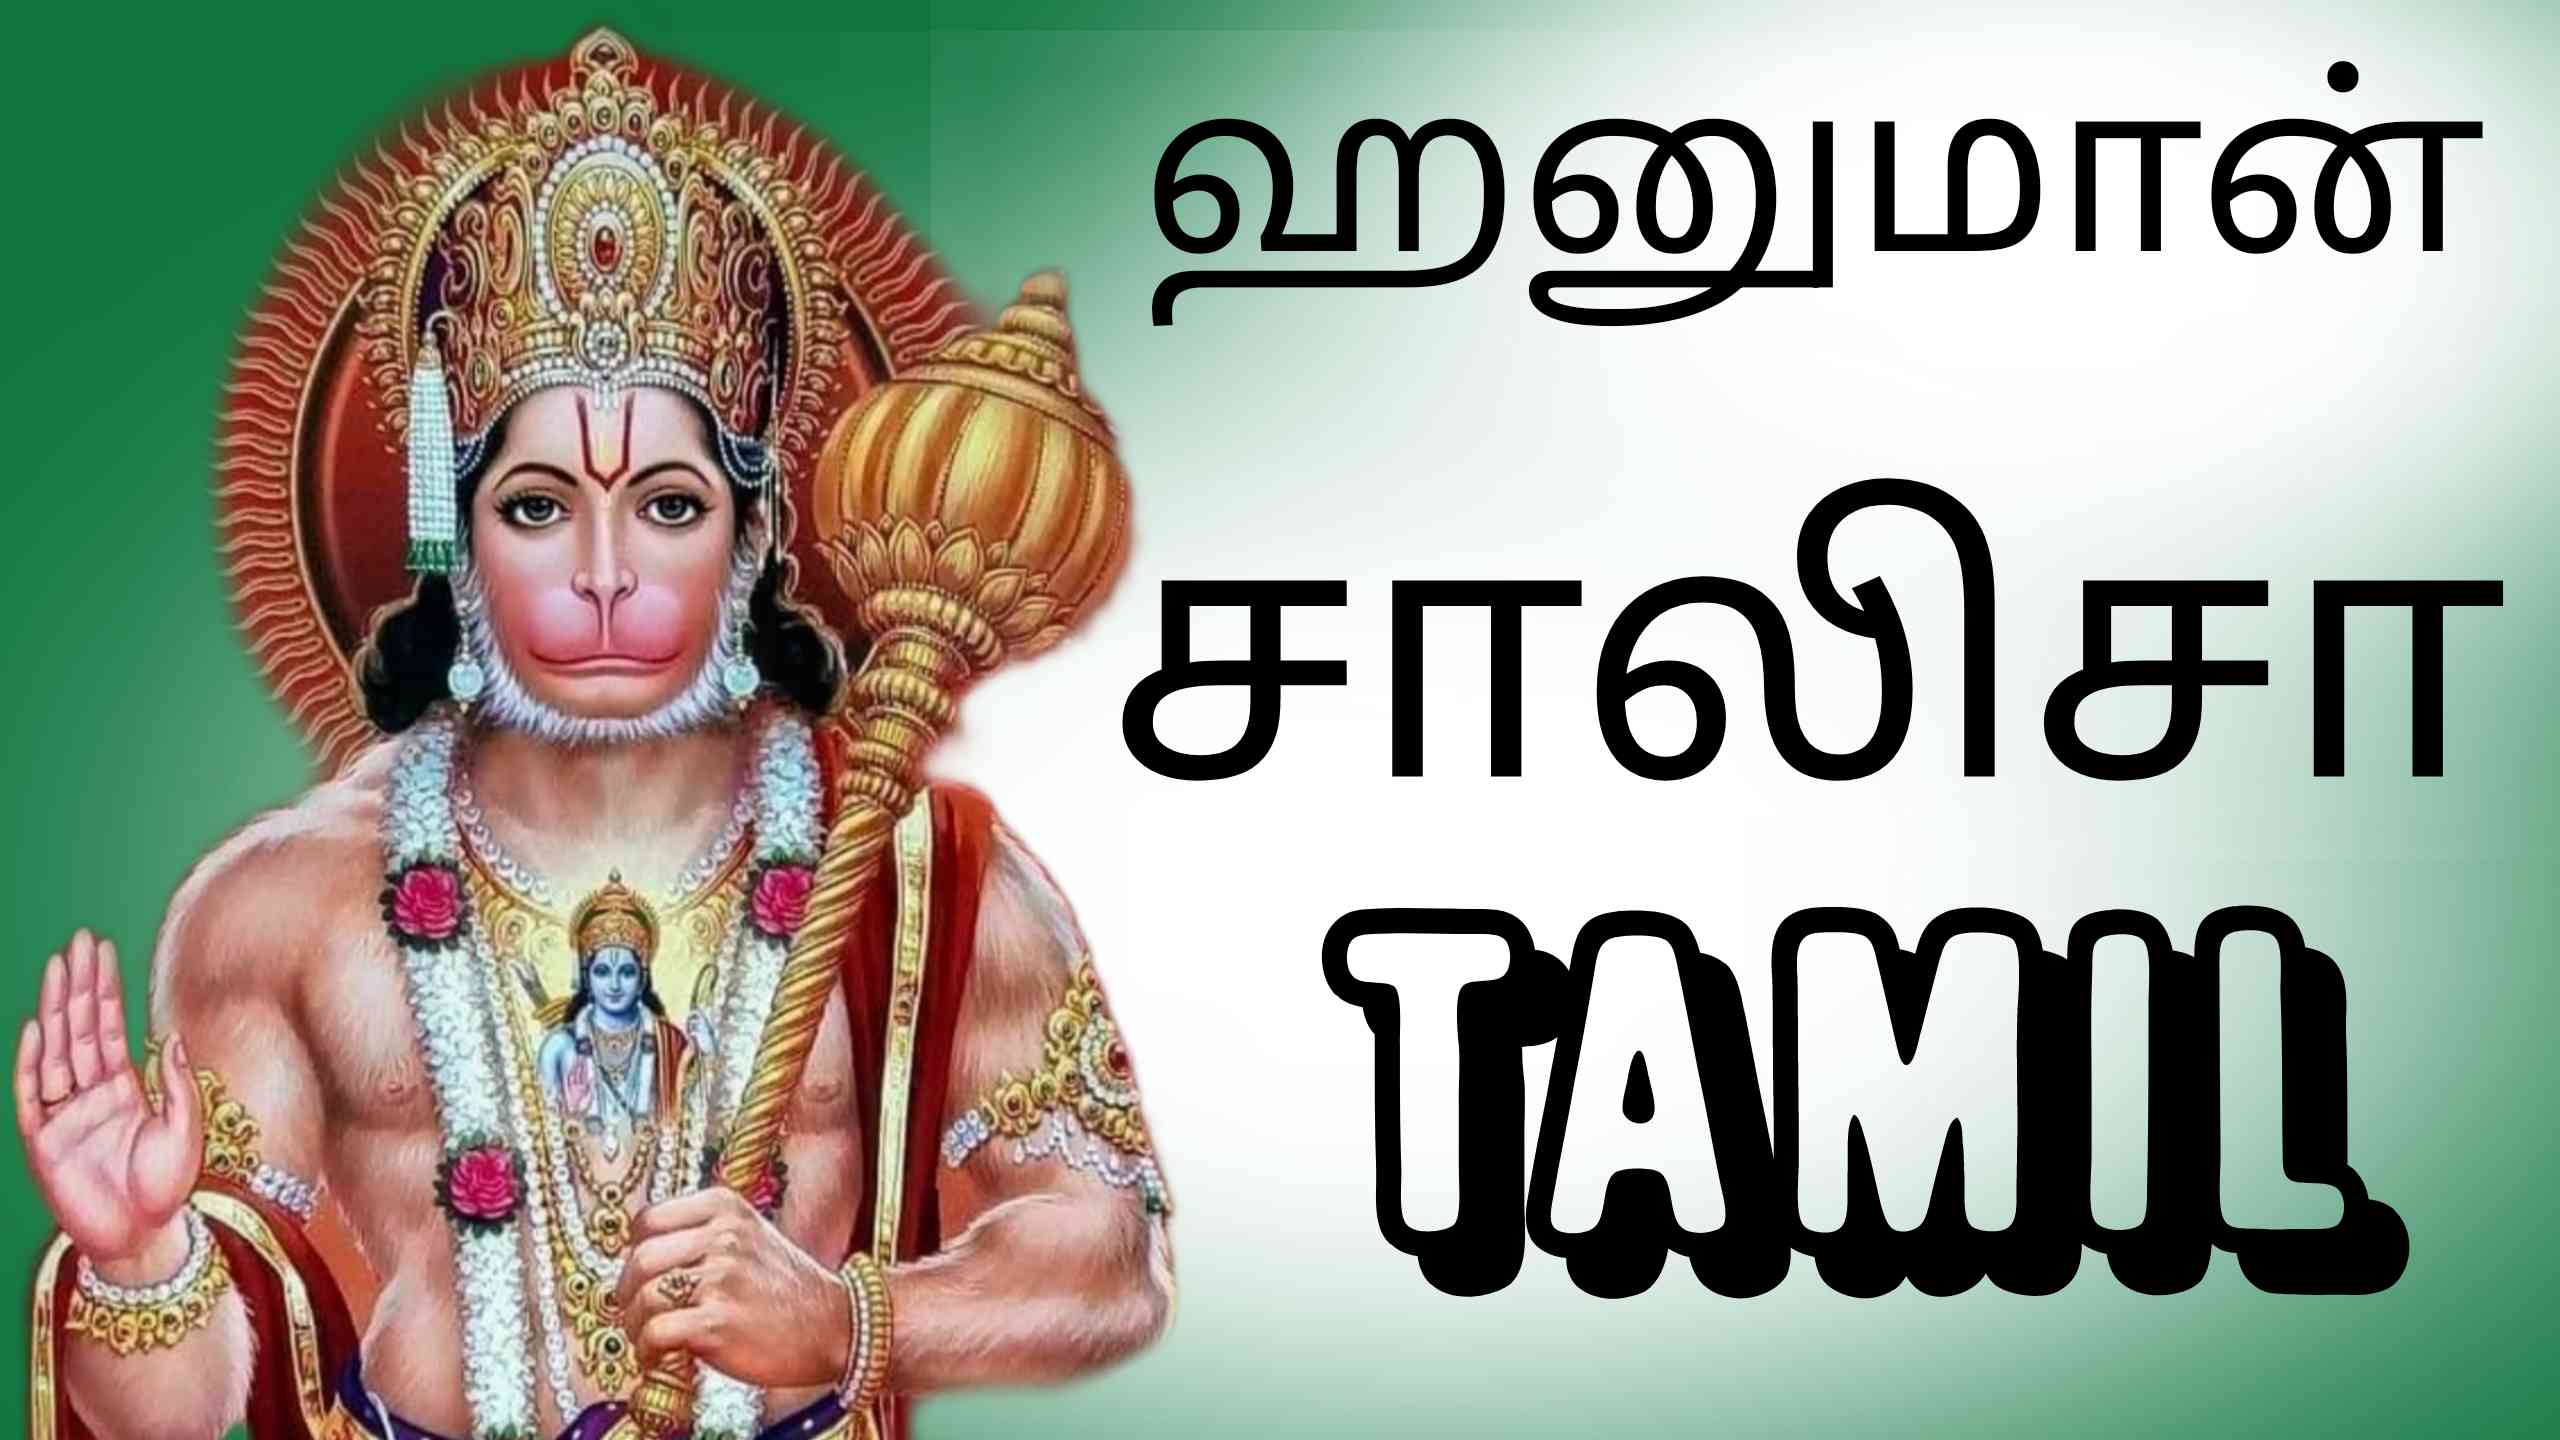 Hanuman Chalisa In Tamil: ஹனுமான் சாலிசா